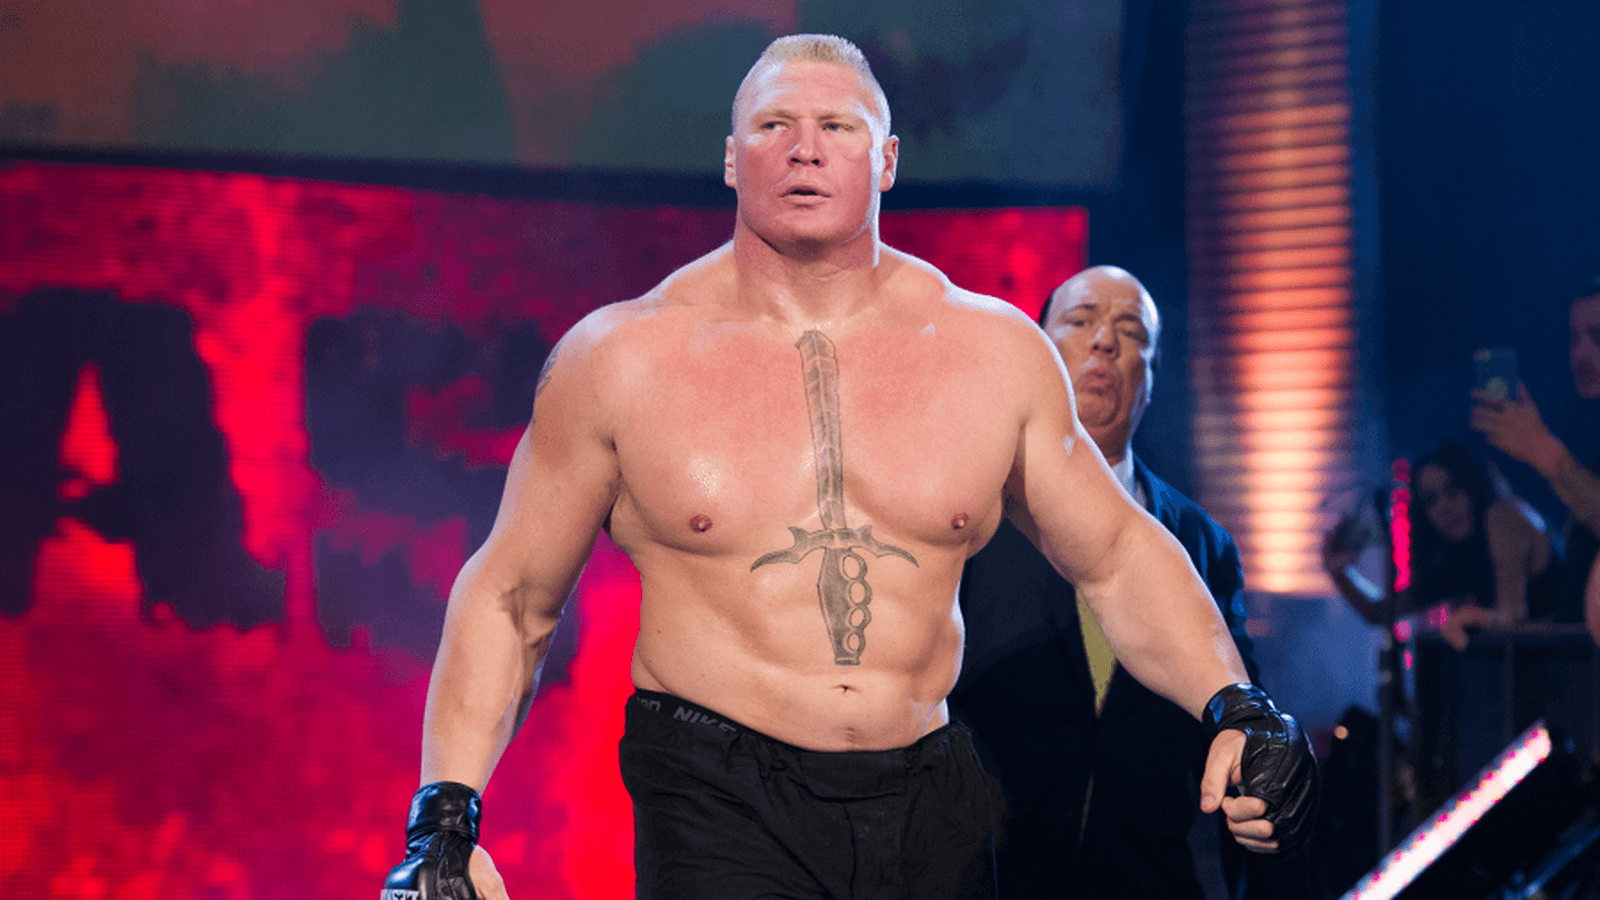 Thursday&;s Brock Lesnar announcement brings unnecessary challenges